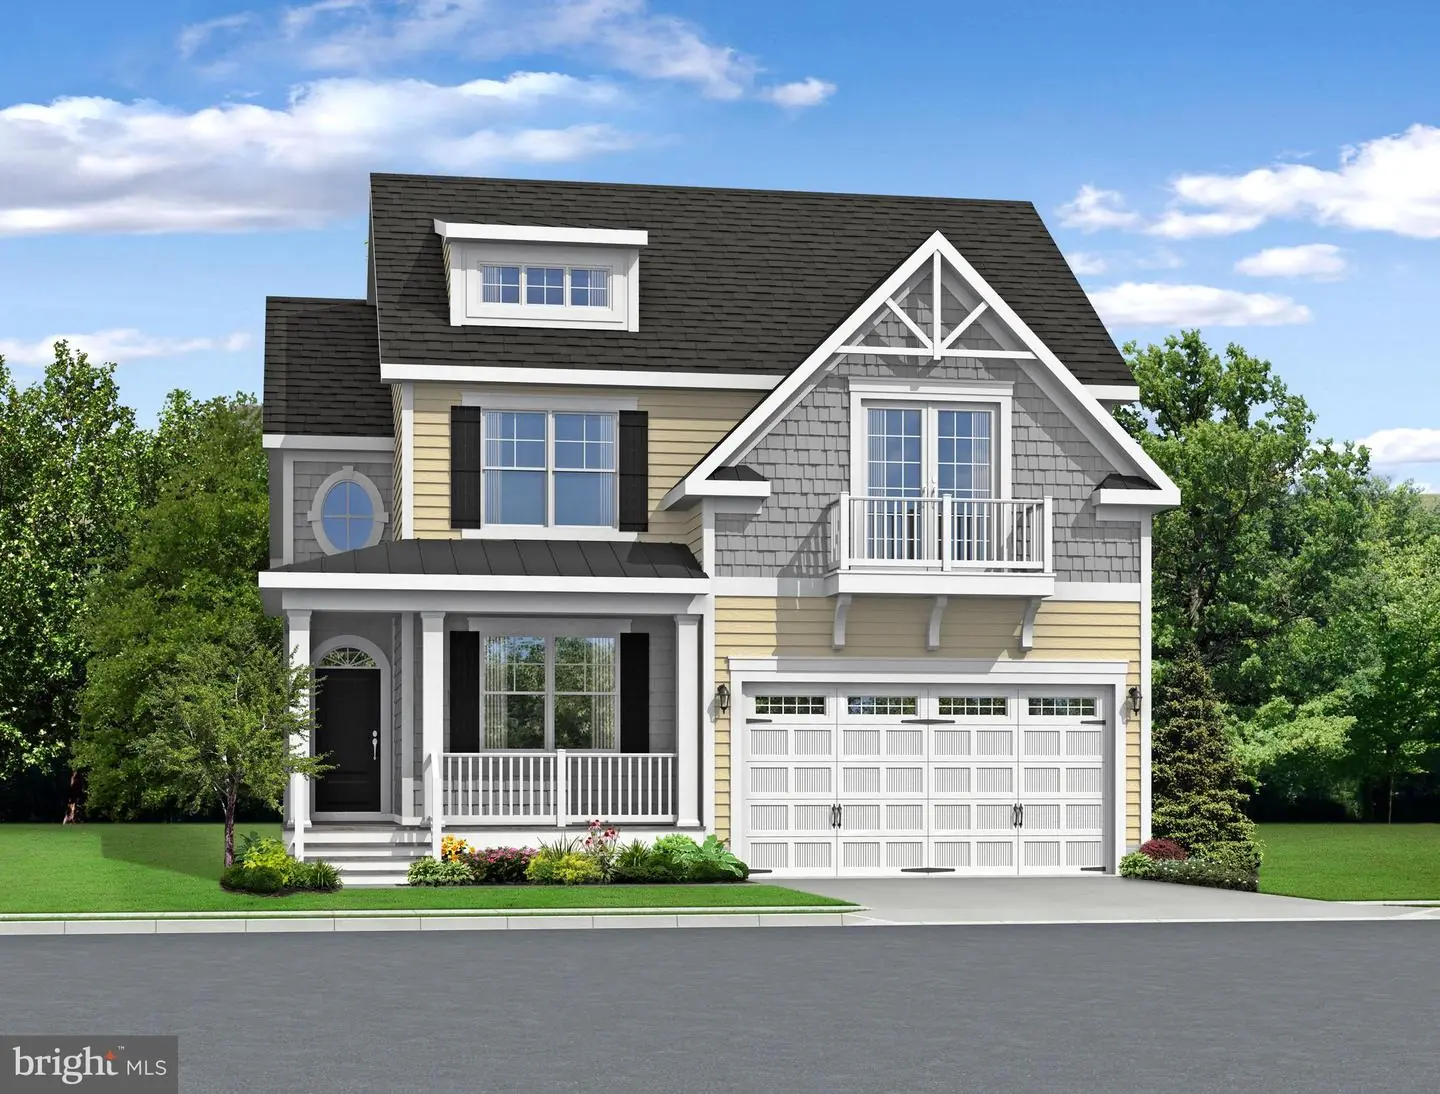 DESU2031440-801988062252-2022-11-02-11-01-29 Iris To-be-built Home Tbd | Millsboro, DE Real Estate For Sale | MLS# Desu2031440  - Lisa Mathena Real Estate